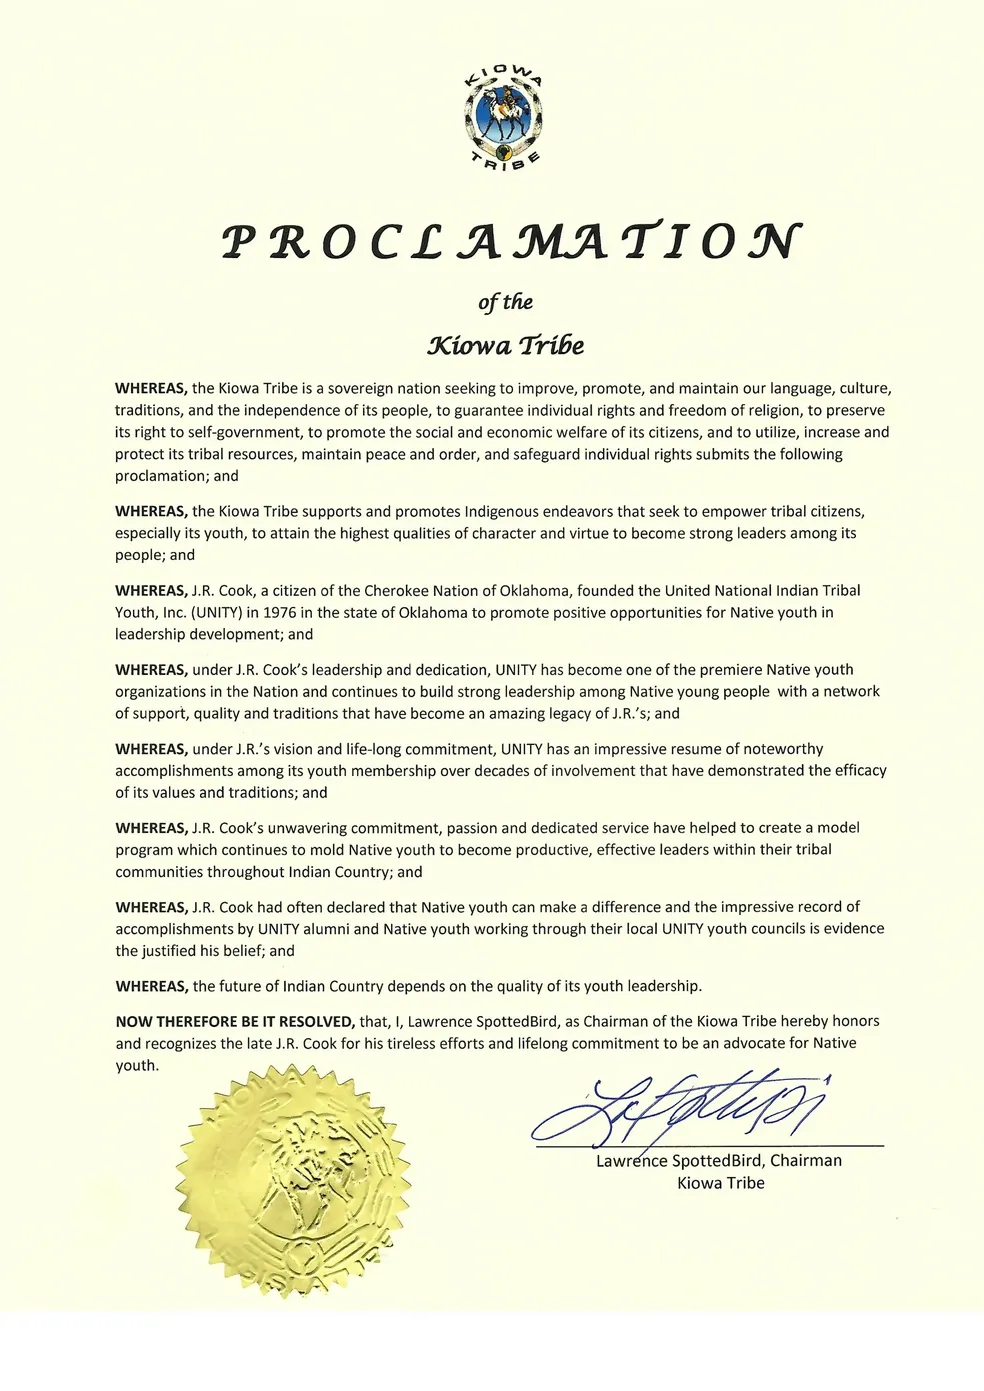 Proclamation of the Kiowa Tribe